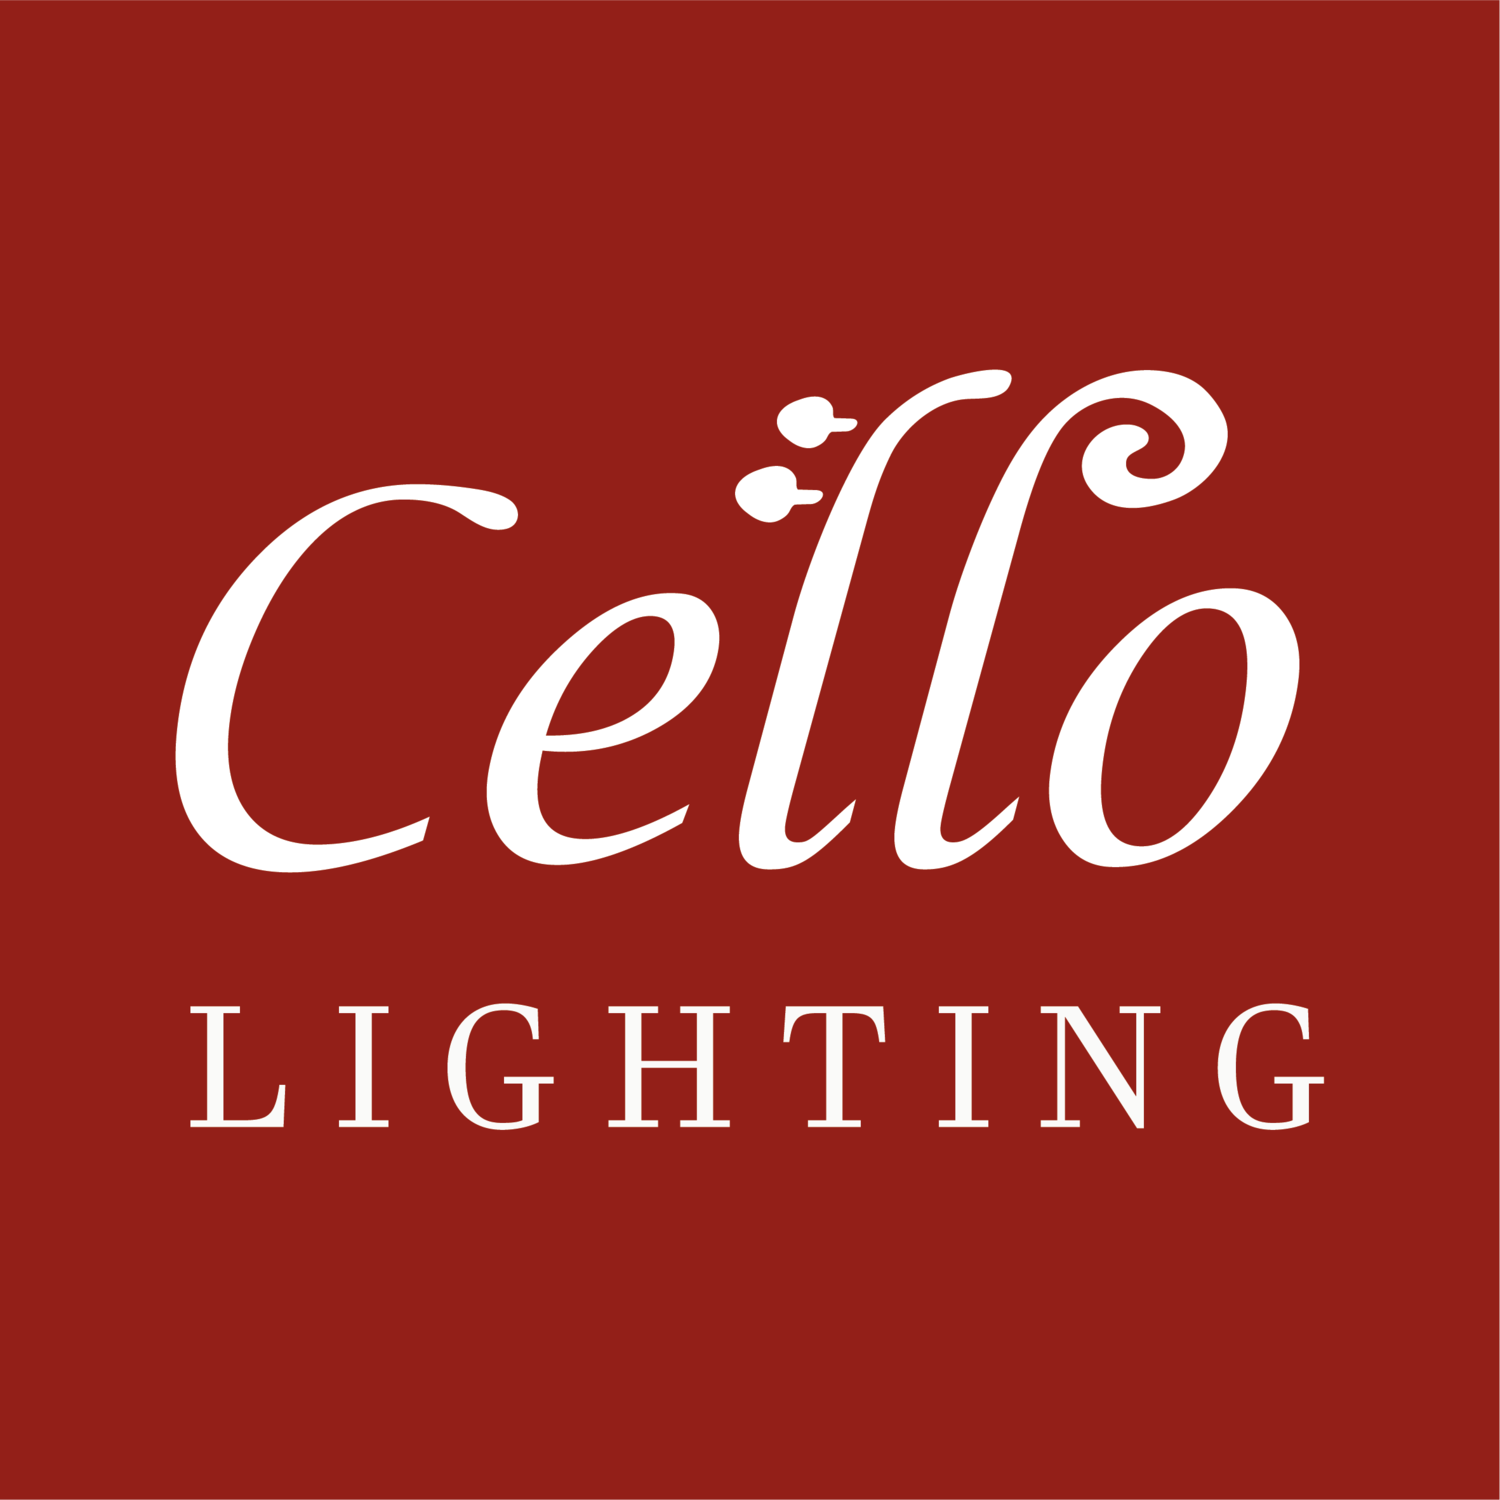 Cello Lighting